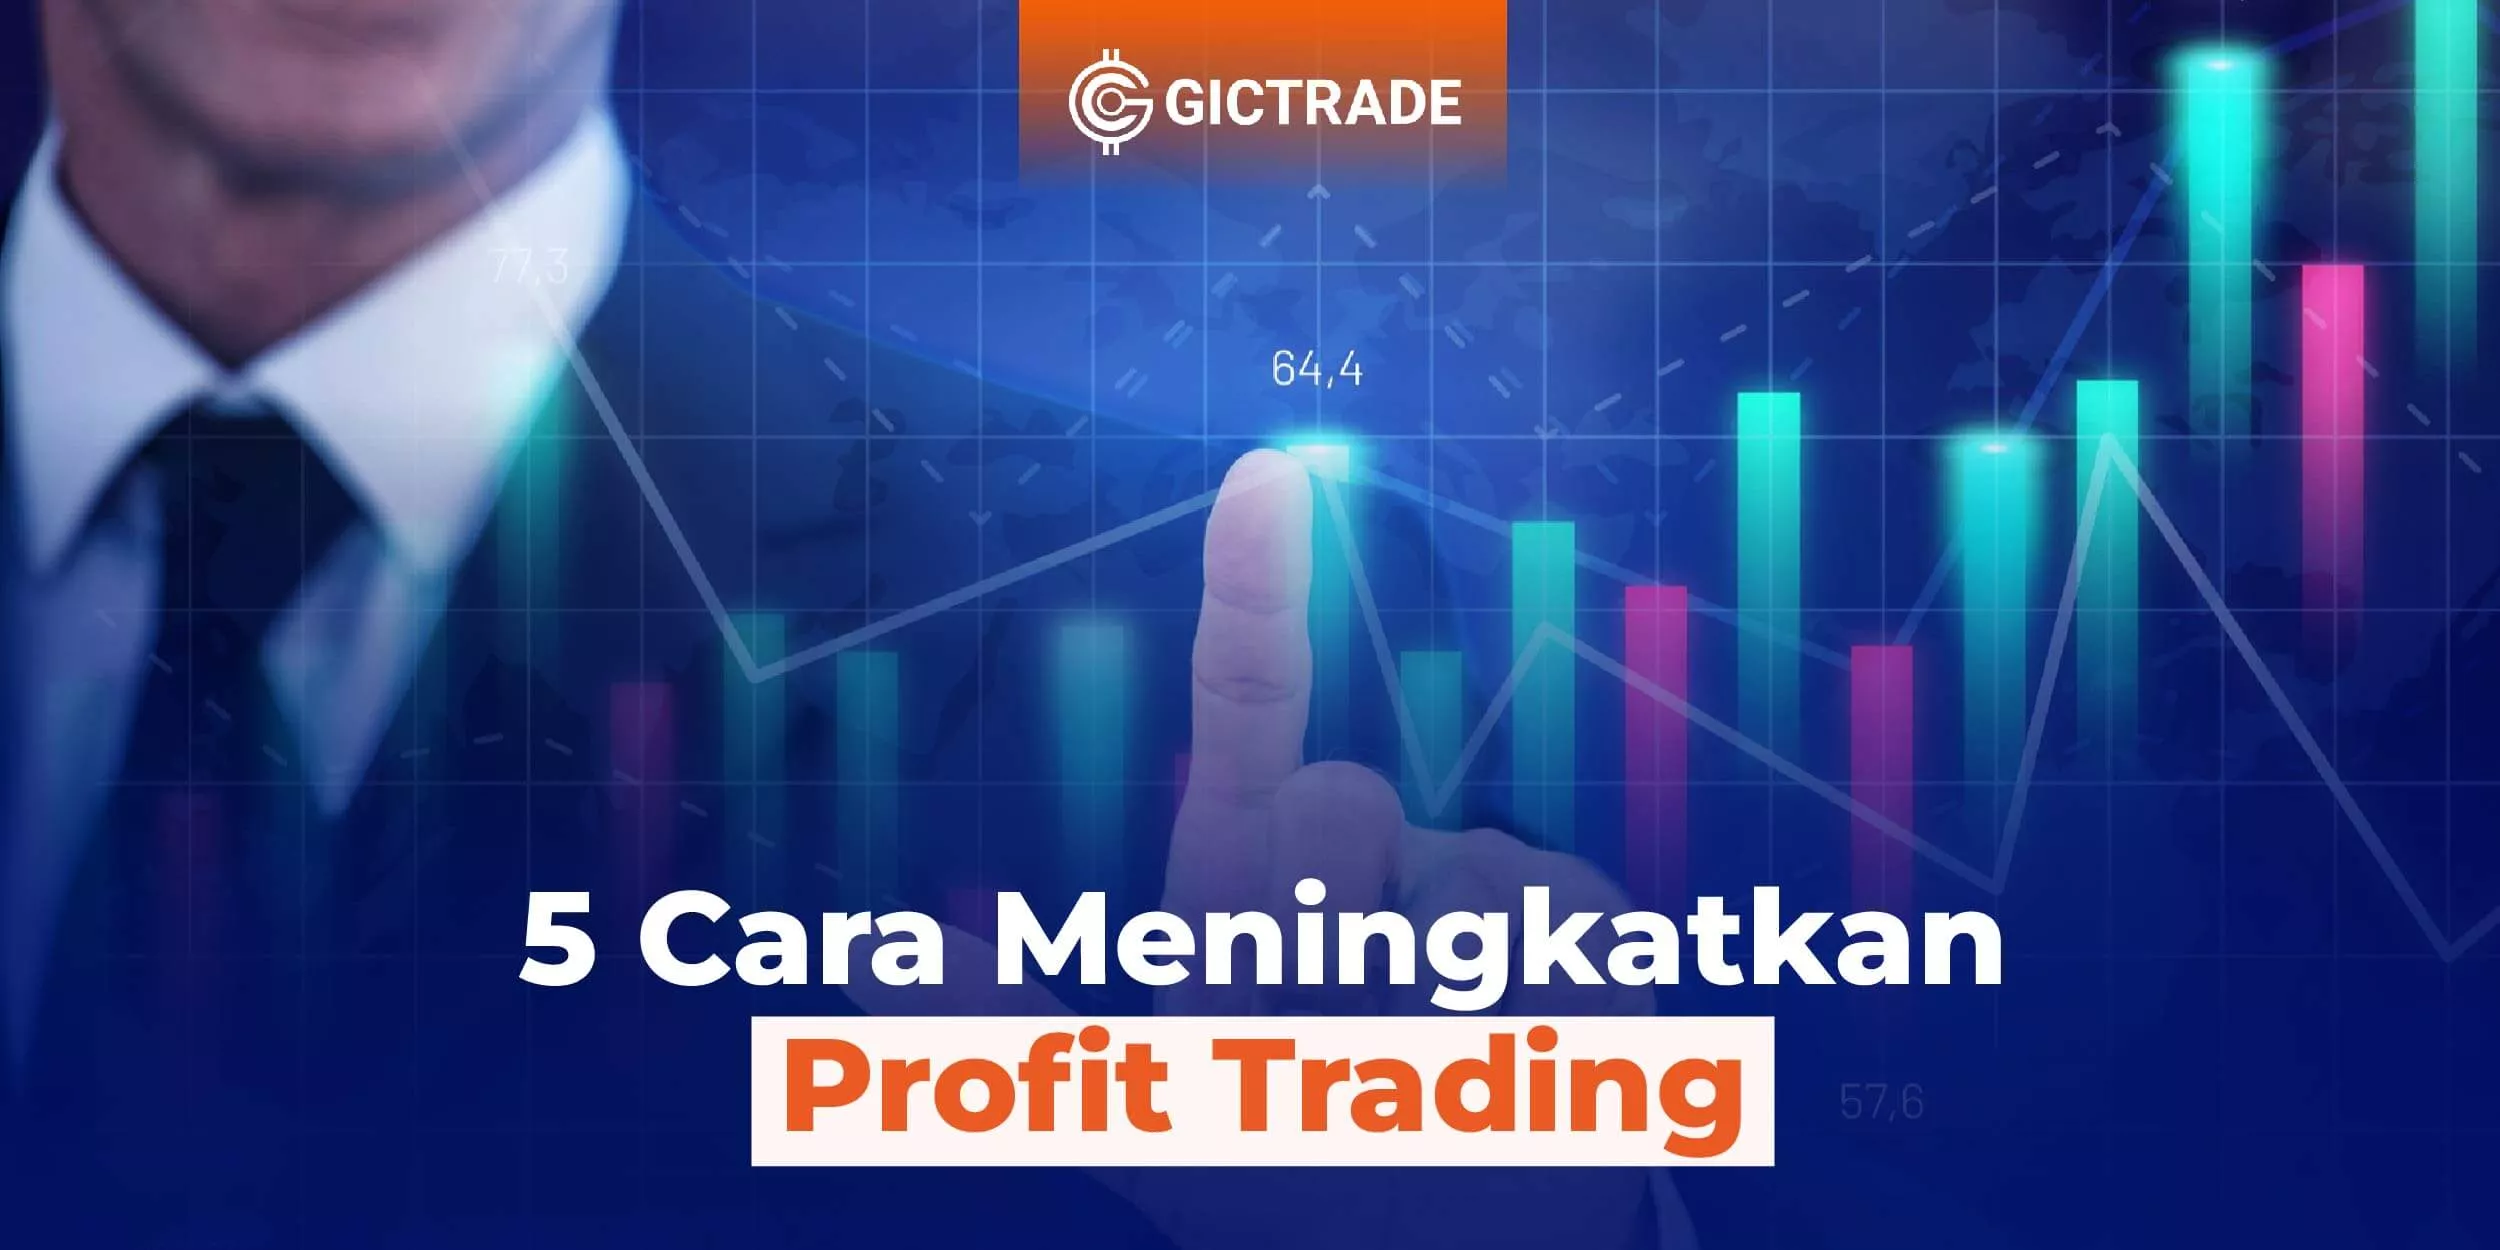 Cara Meningkatkan Profit Trading